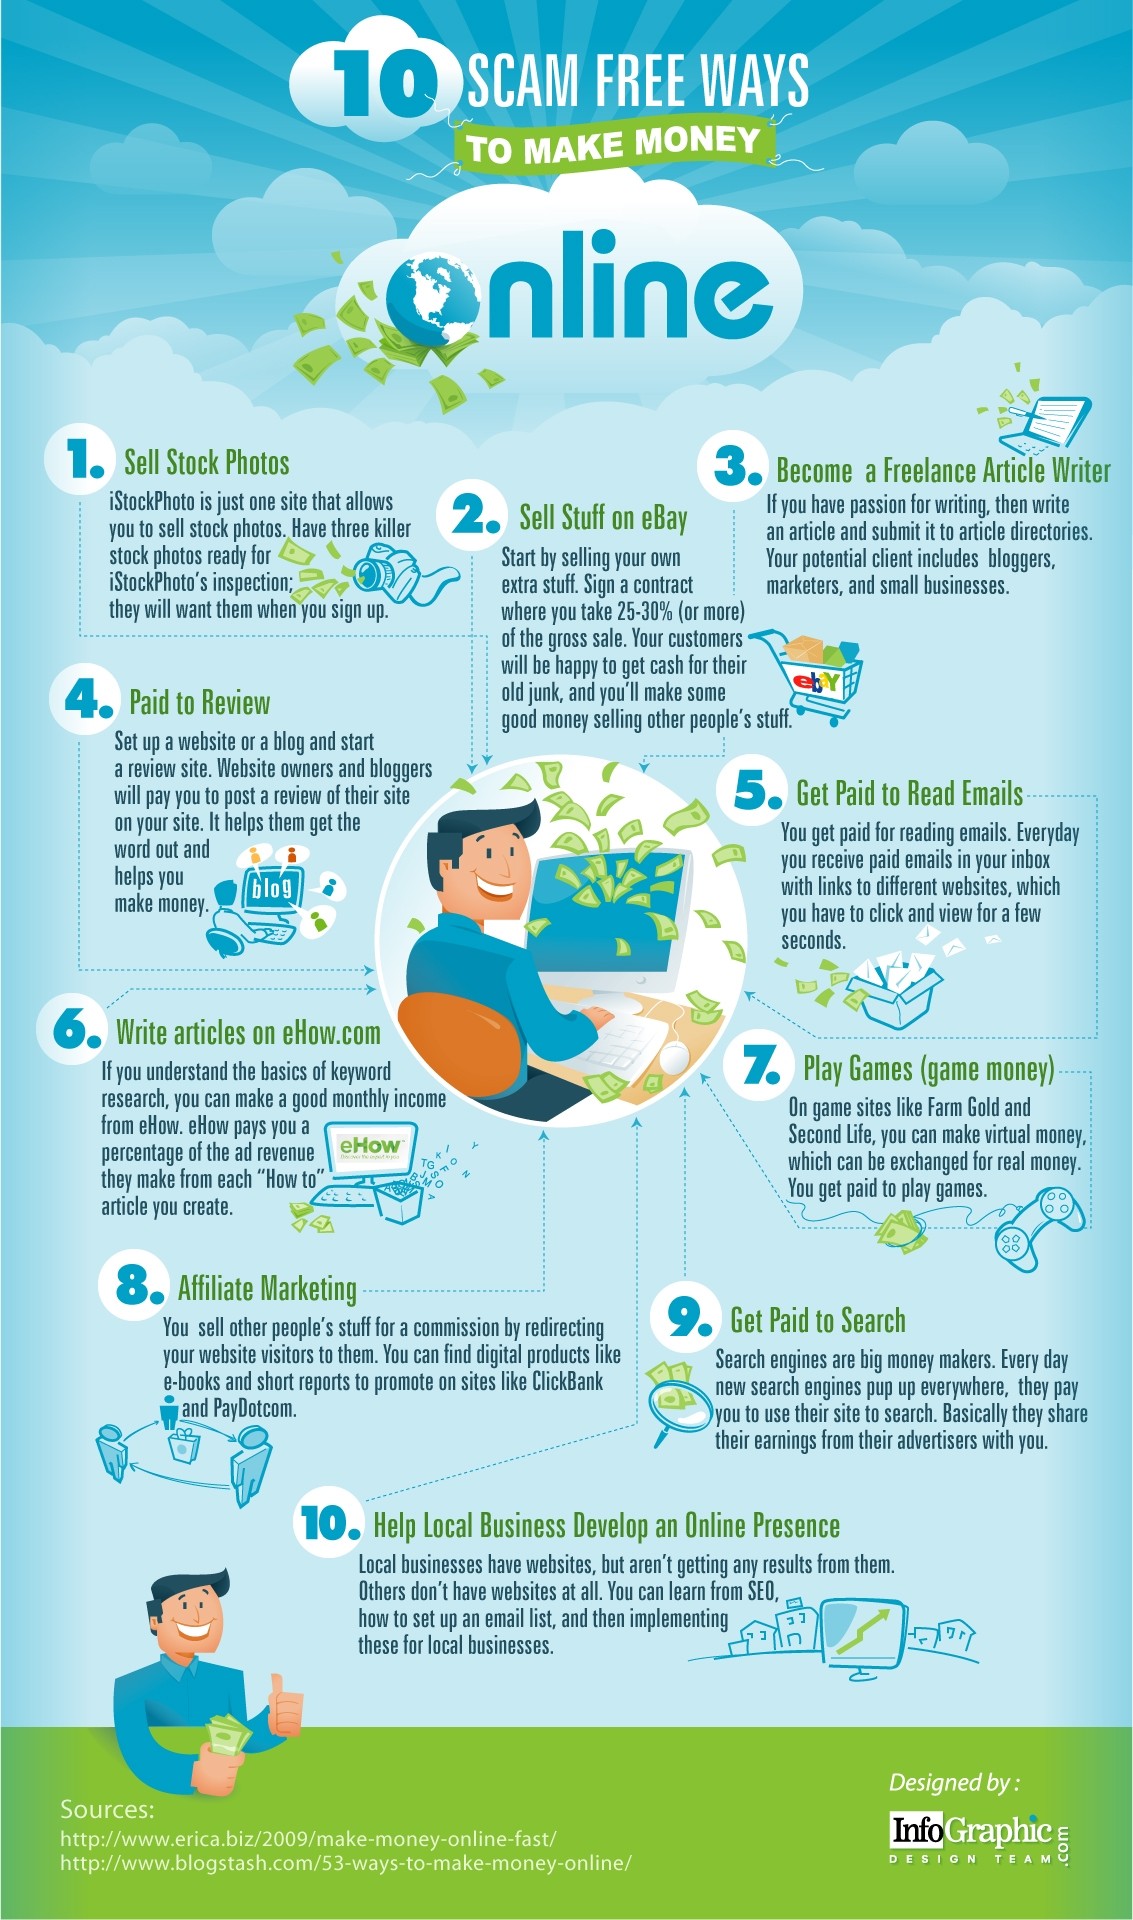 10 Scam Free Ways to Make Money Online - #infographic